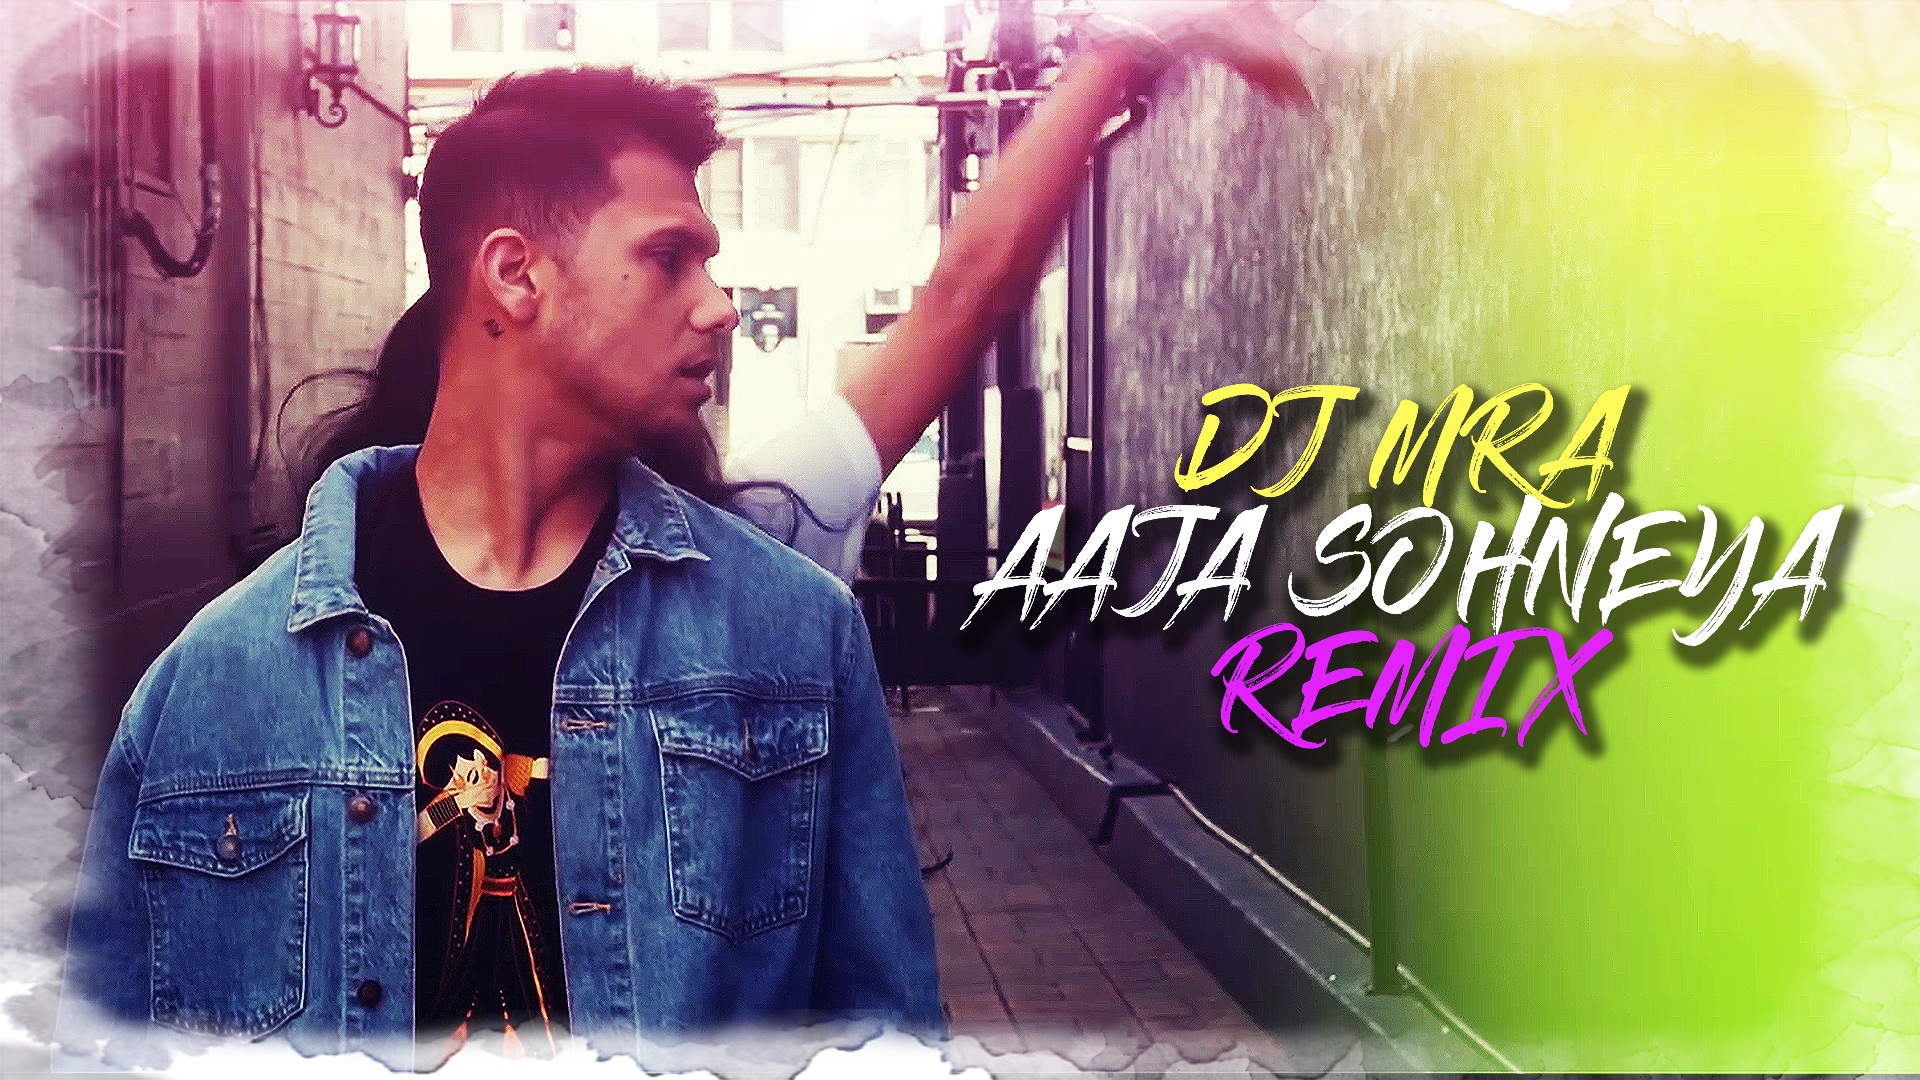 Mickey Singh - Aaja Sohneya - I Am Urban Desi (DJ MRA Chillout Remix) 